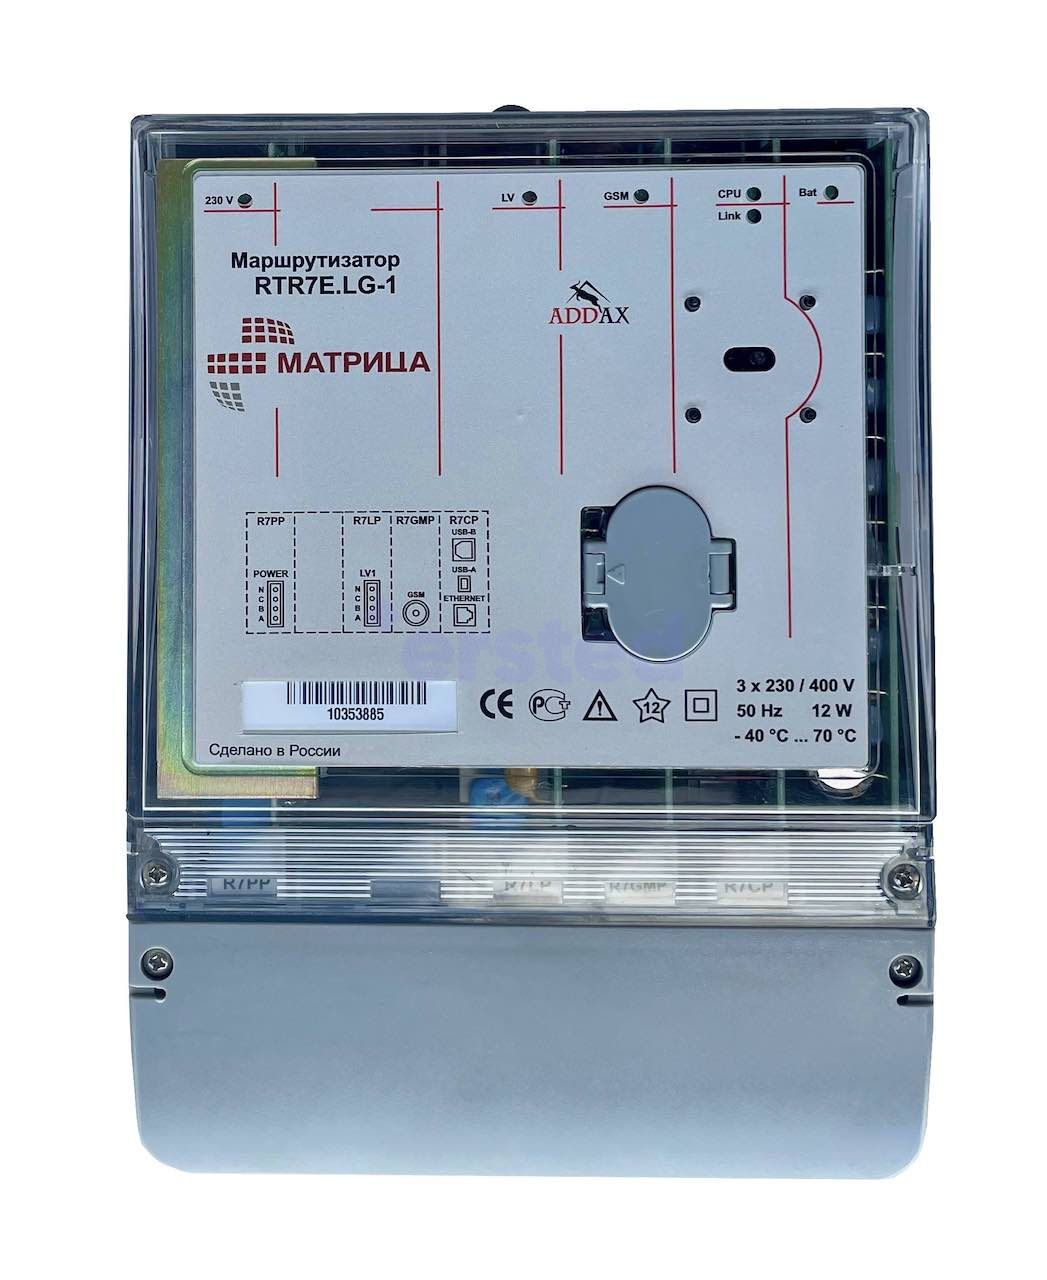 RTR 7E.LG-1-1, PLC (FSK/S-FSK/OFDM), Ethernet, GPRS, USB, RS-485, Маршрутизатор (УСПД) Матрица, фото 